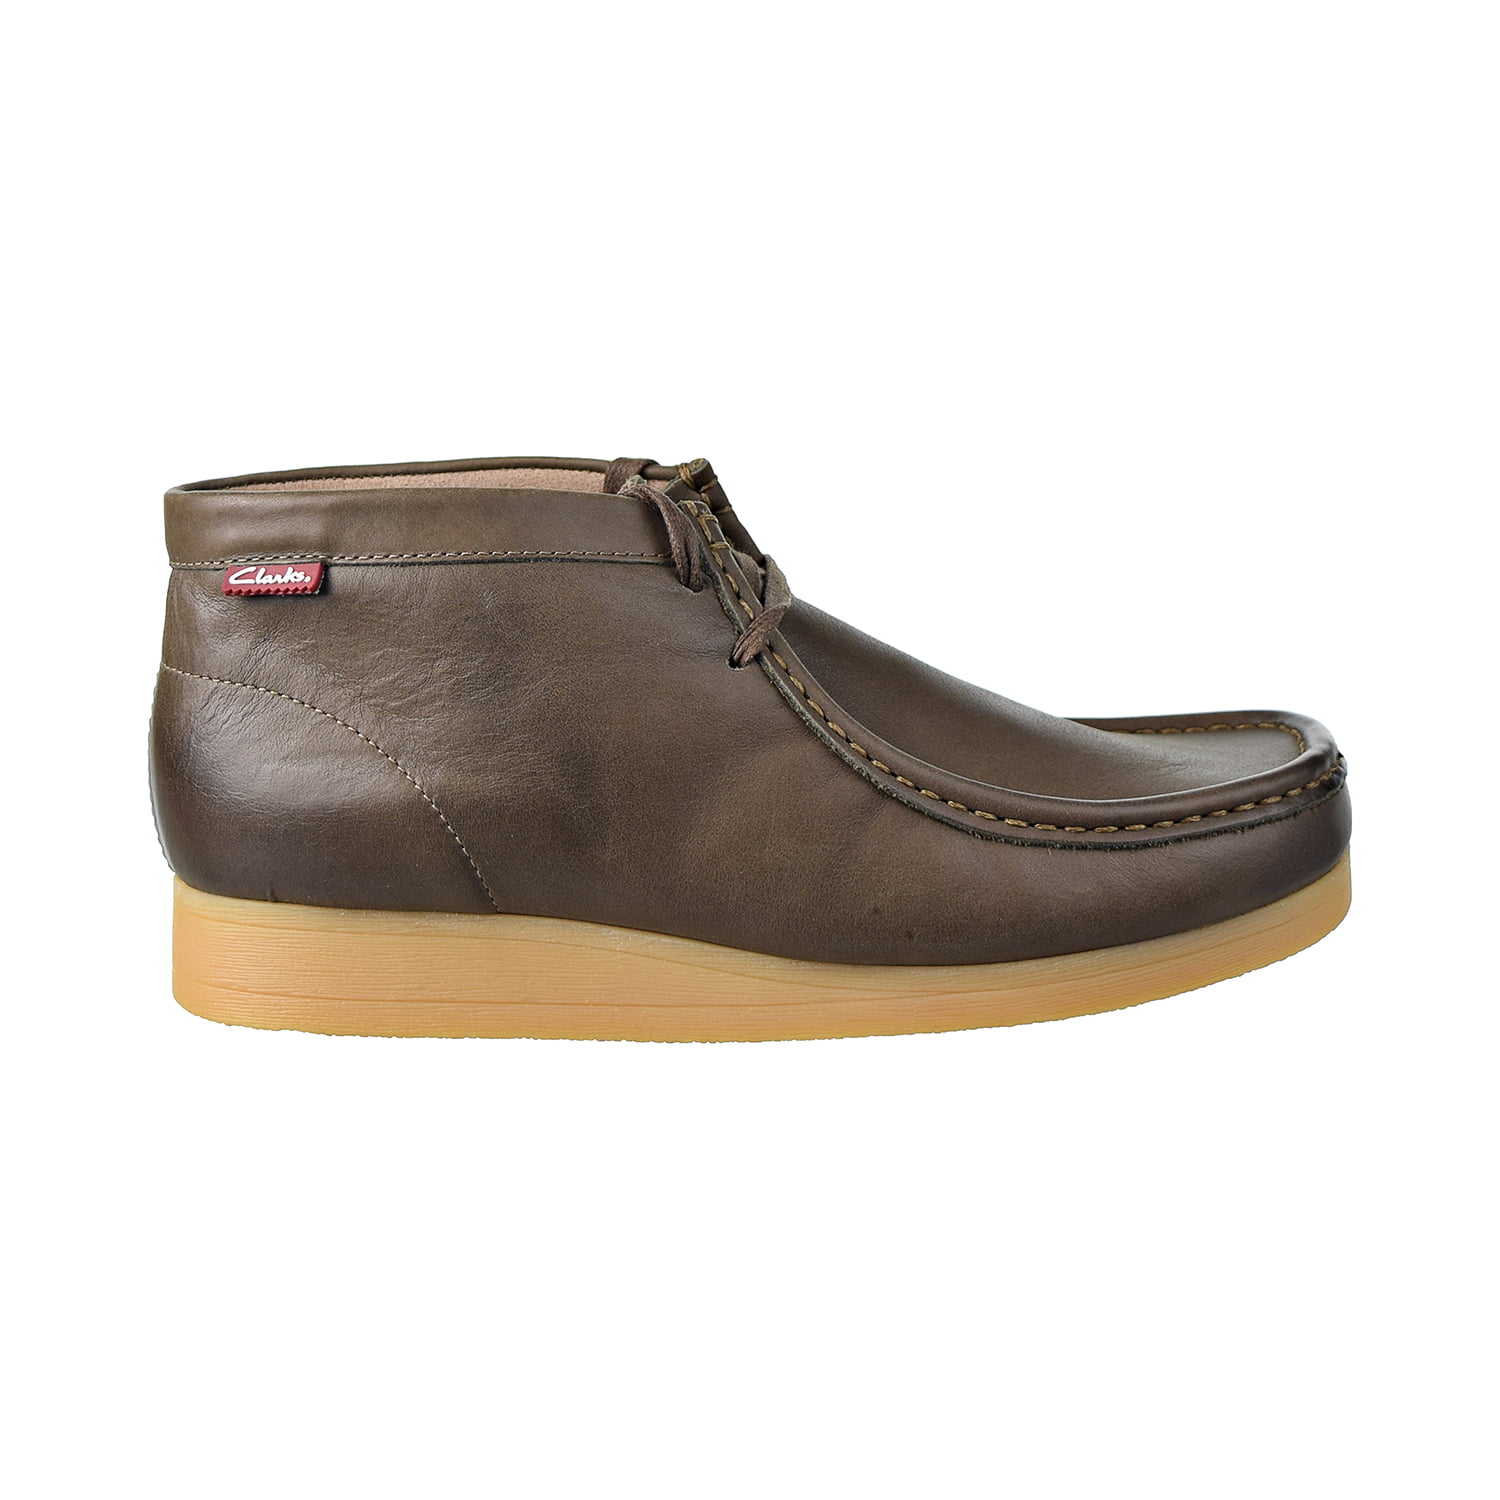 Clarks Stinson Hi Men's Dark Brown Leather Wallabee Style Boots 26129530 